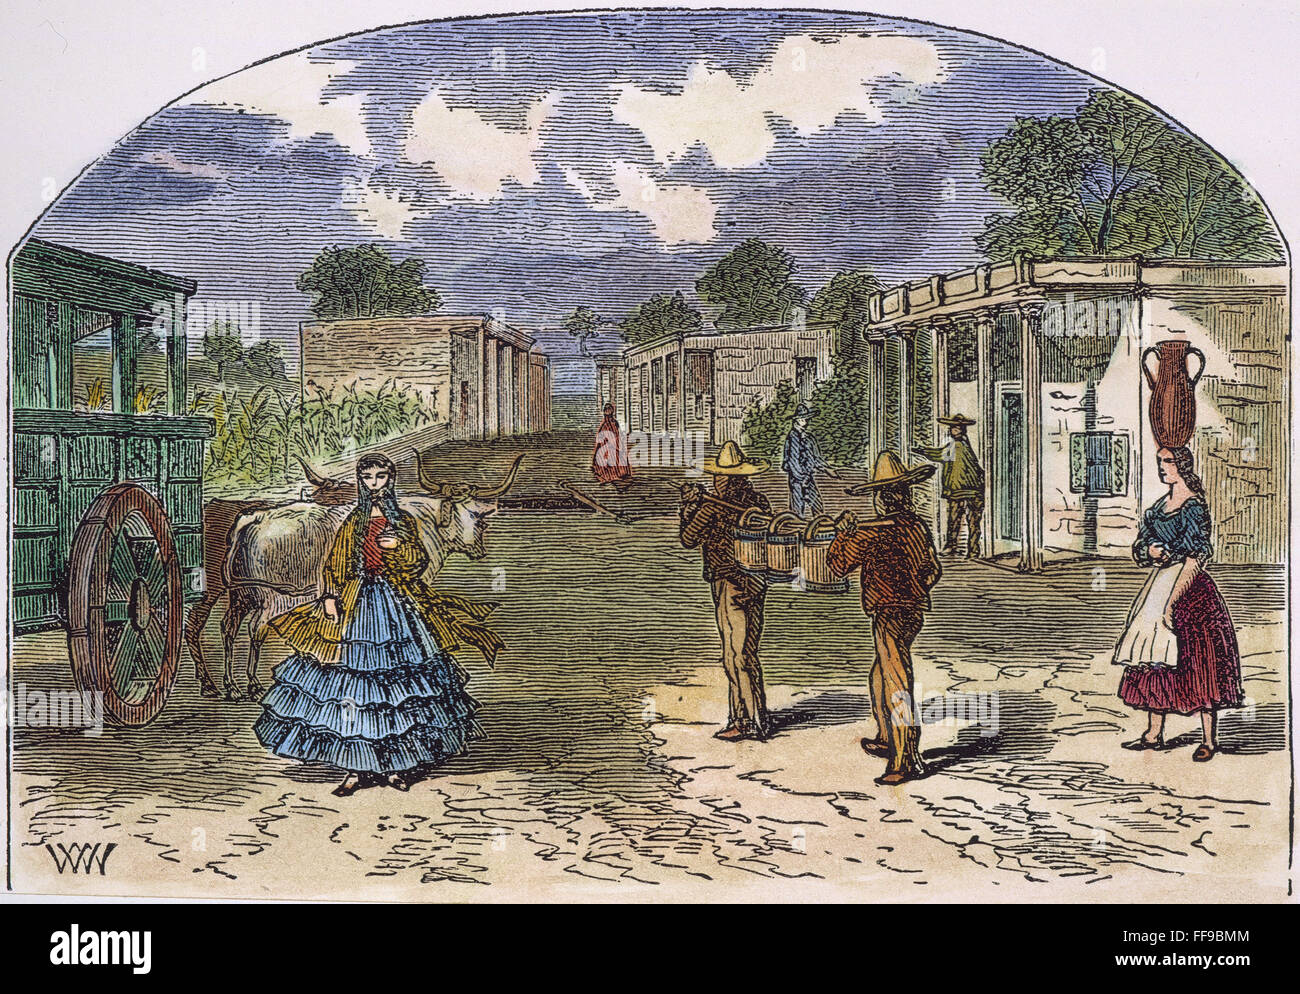 TEXAS: EL PASO, 1860s. /nEl Paso, Texas, in the 1860s. Wood engraving, 1867. Stock Photo